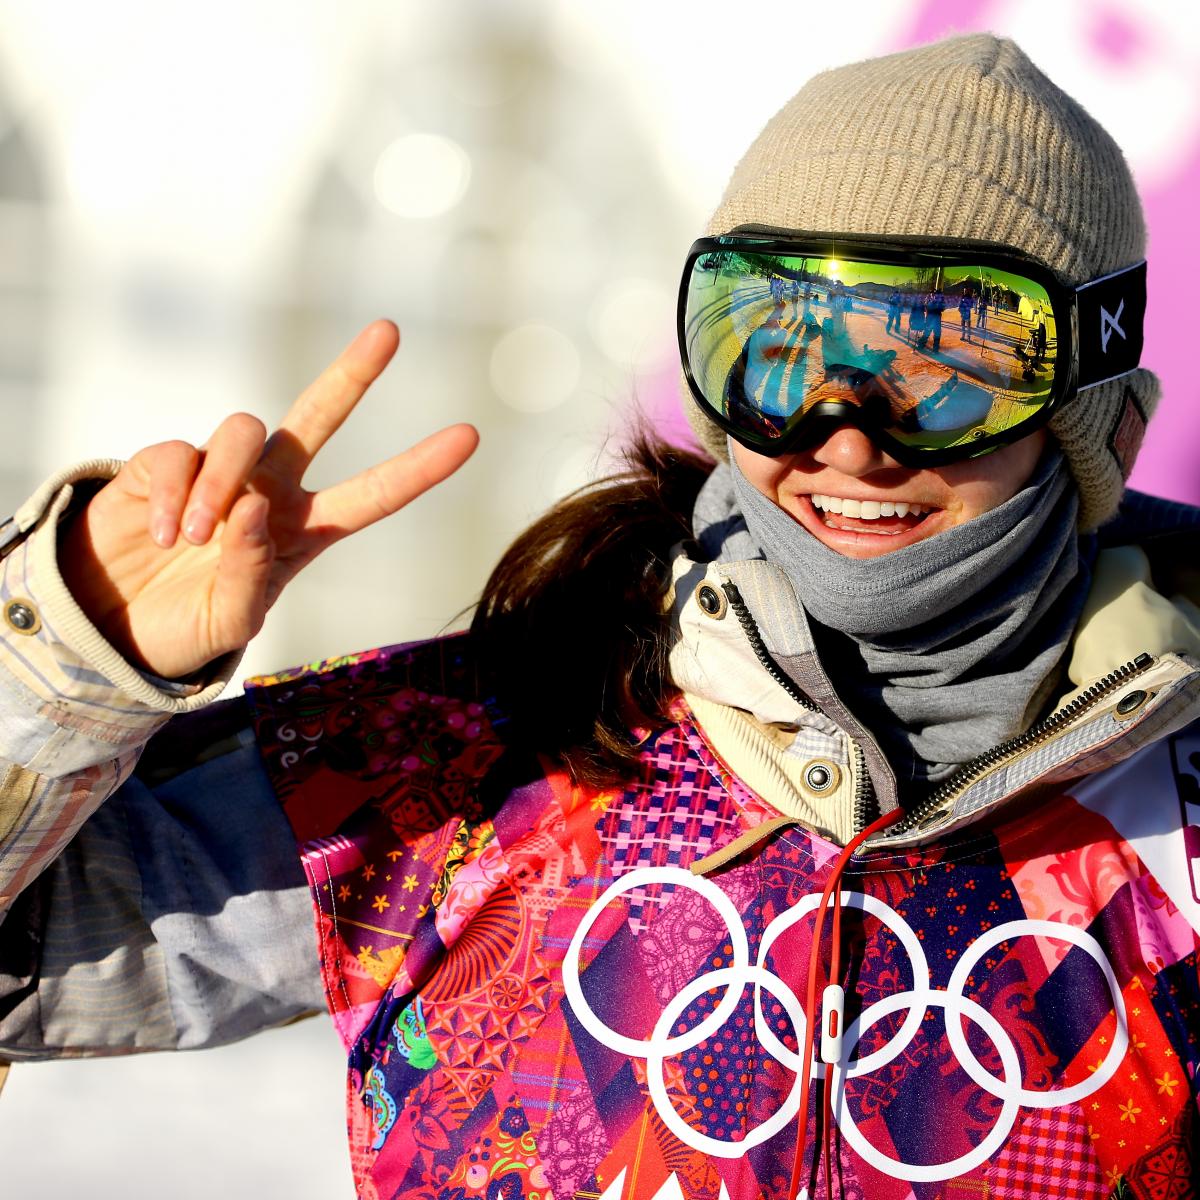 Olympic Snowboarding Women's Halfpipe Schedule 2014: Live Stream Info